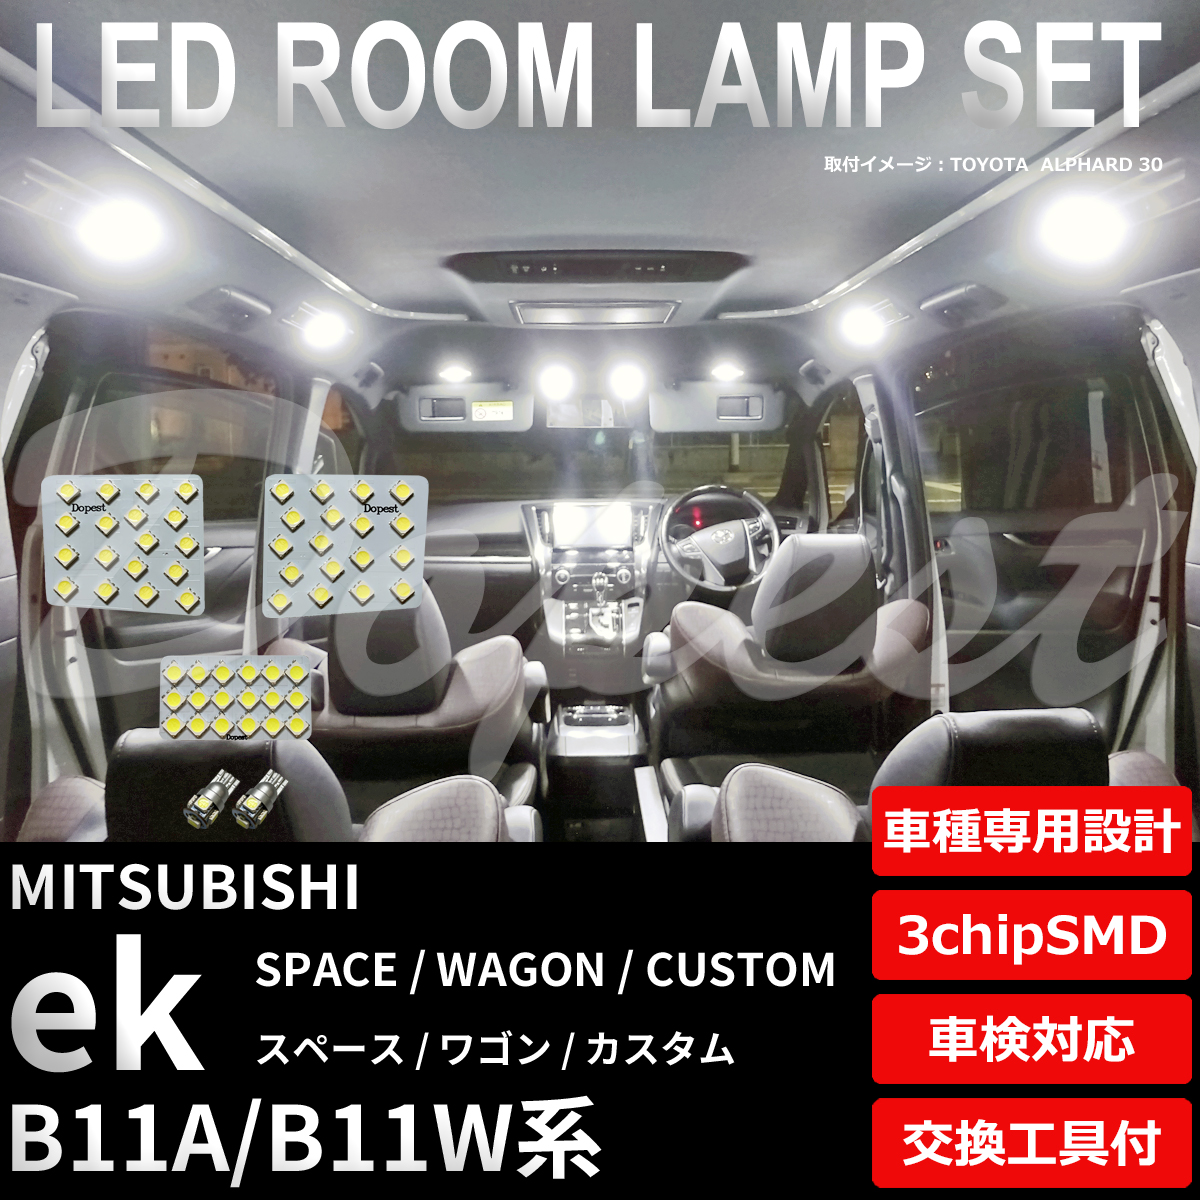 ek スペース/ワゴン/カスタム LEDルームランプセット B11A/11W系